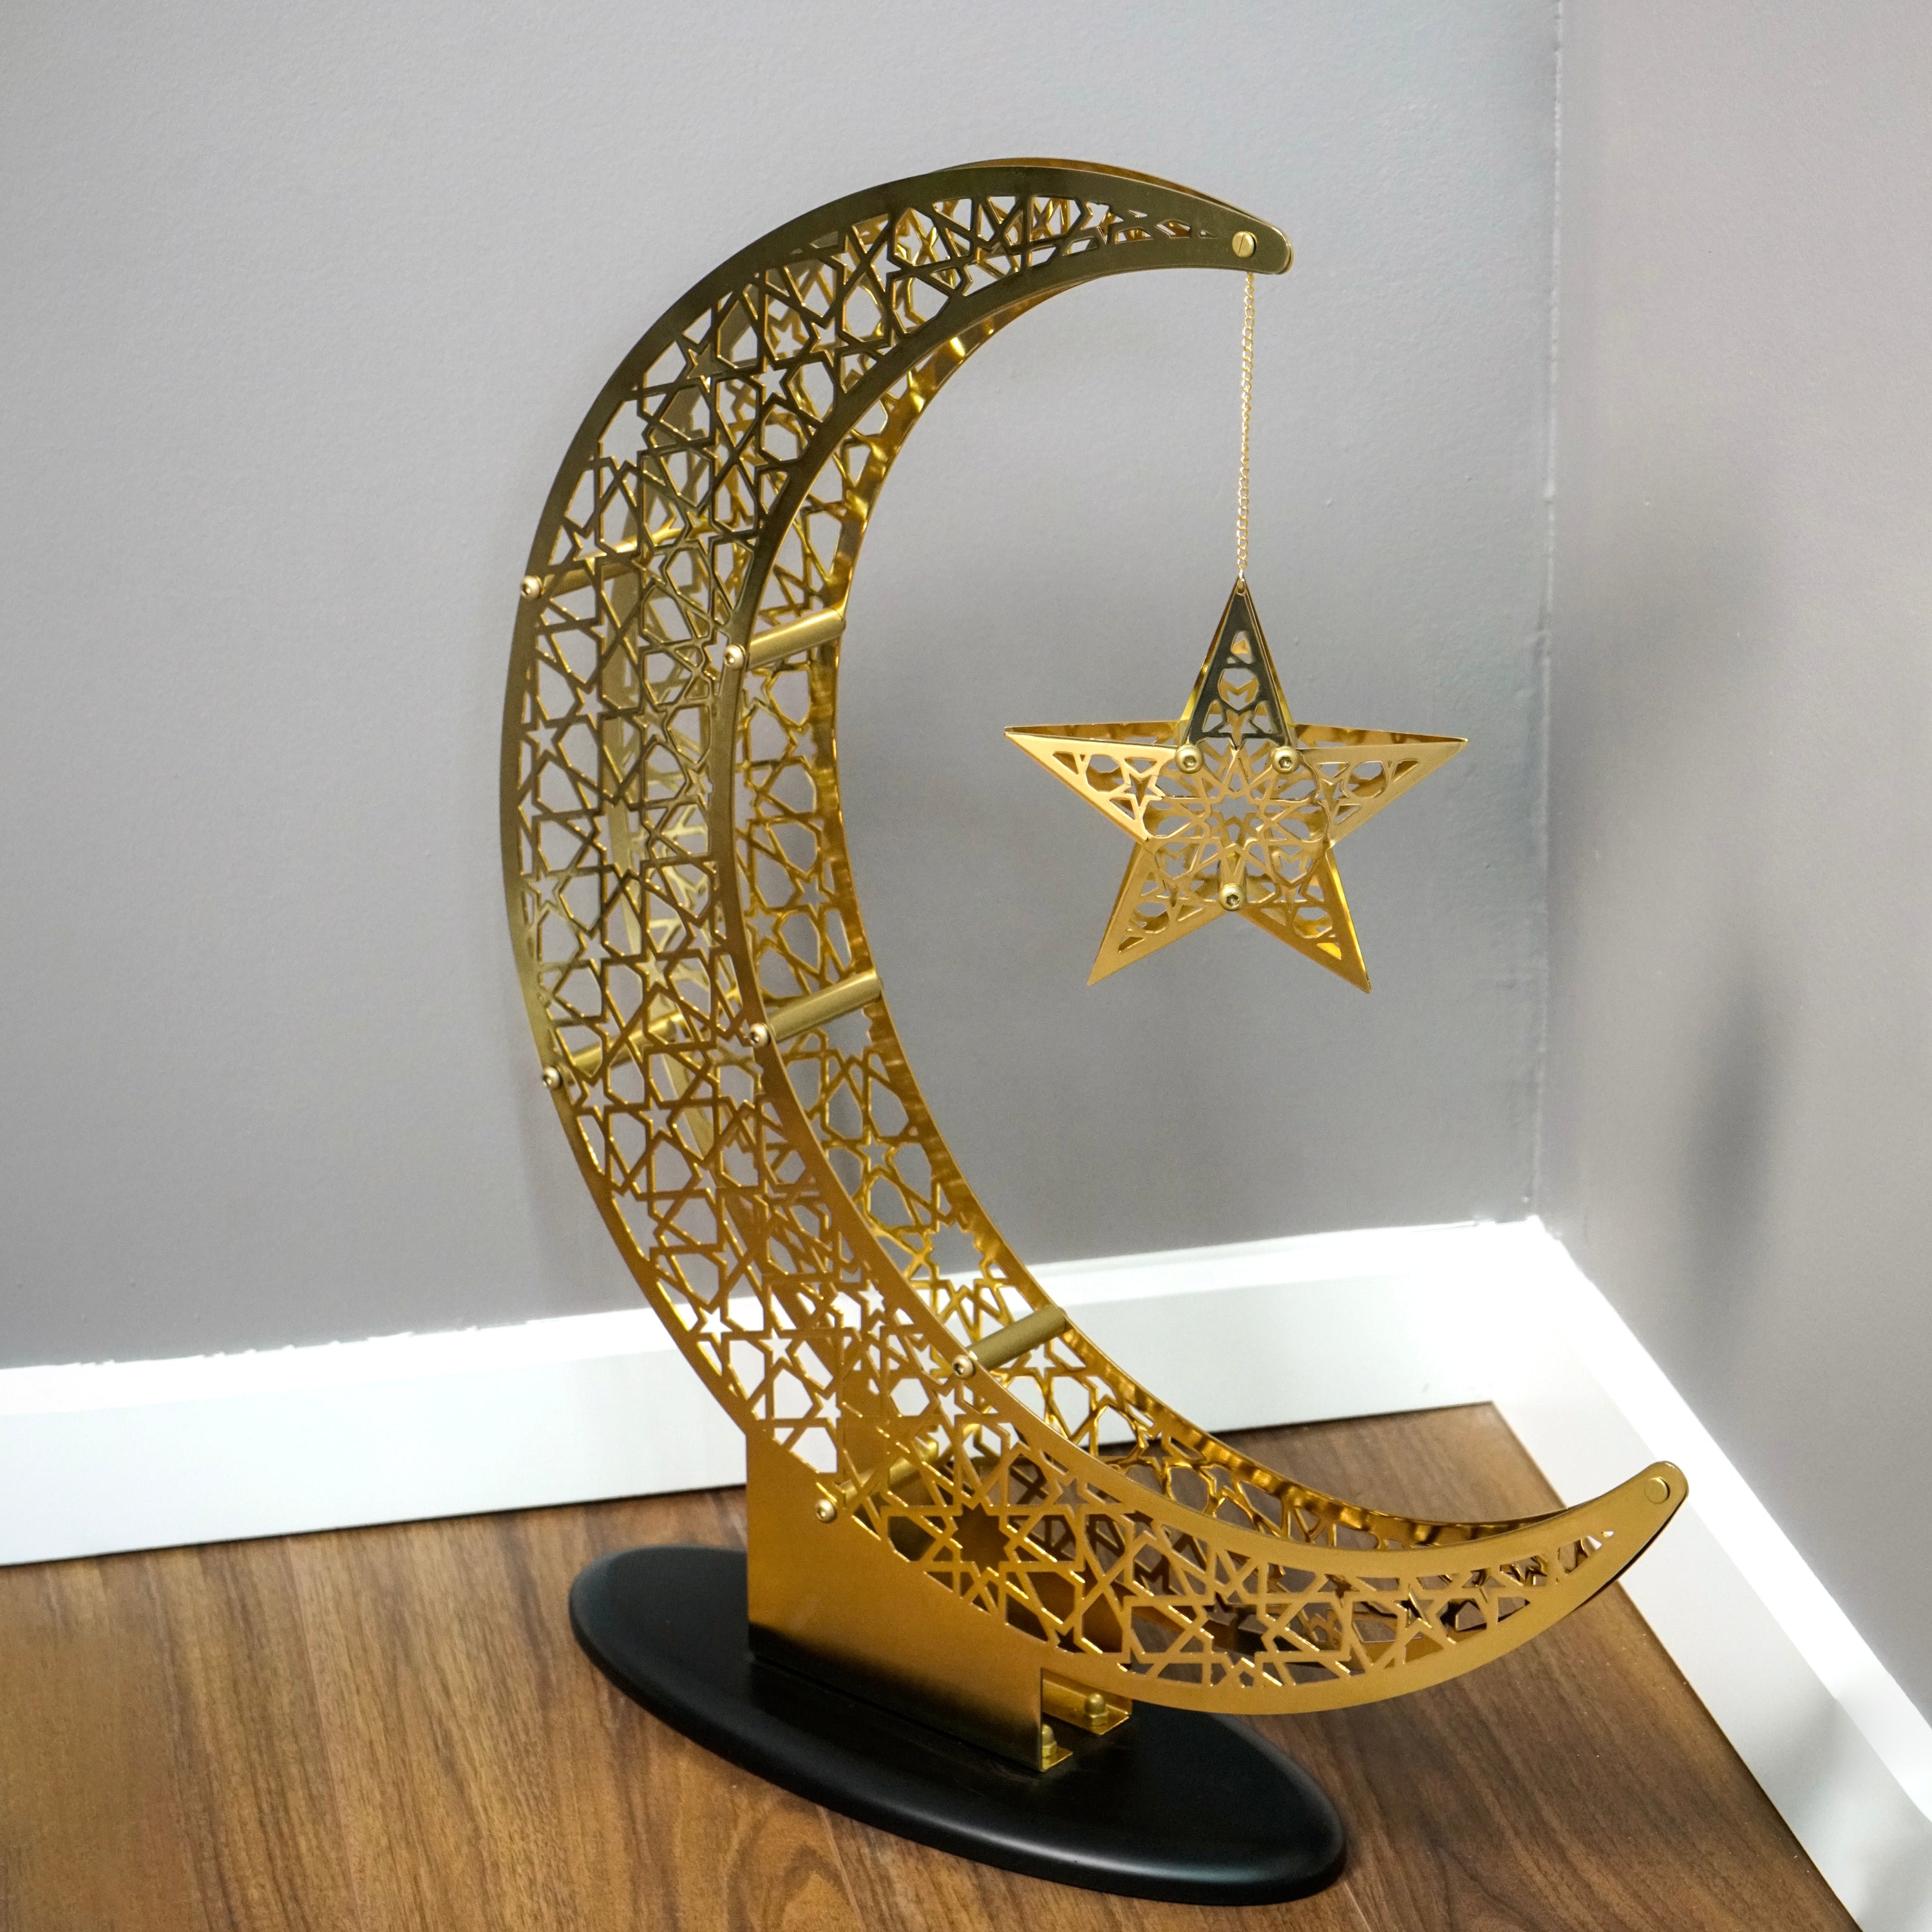 Ramadan dekoration - .de